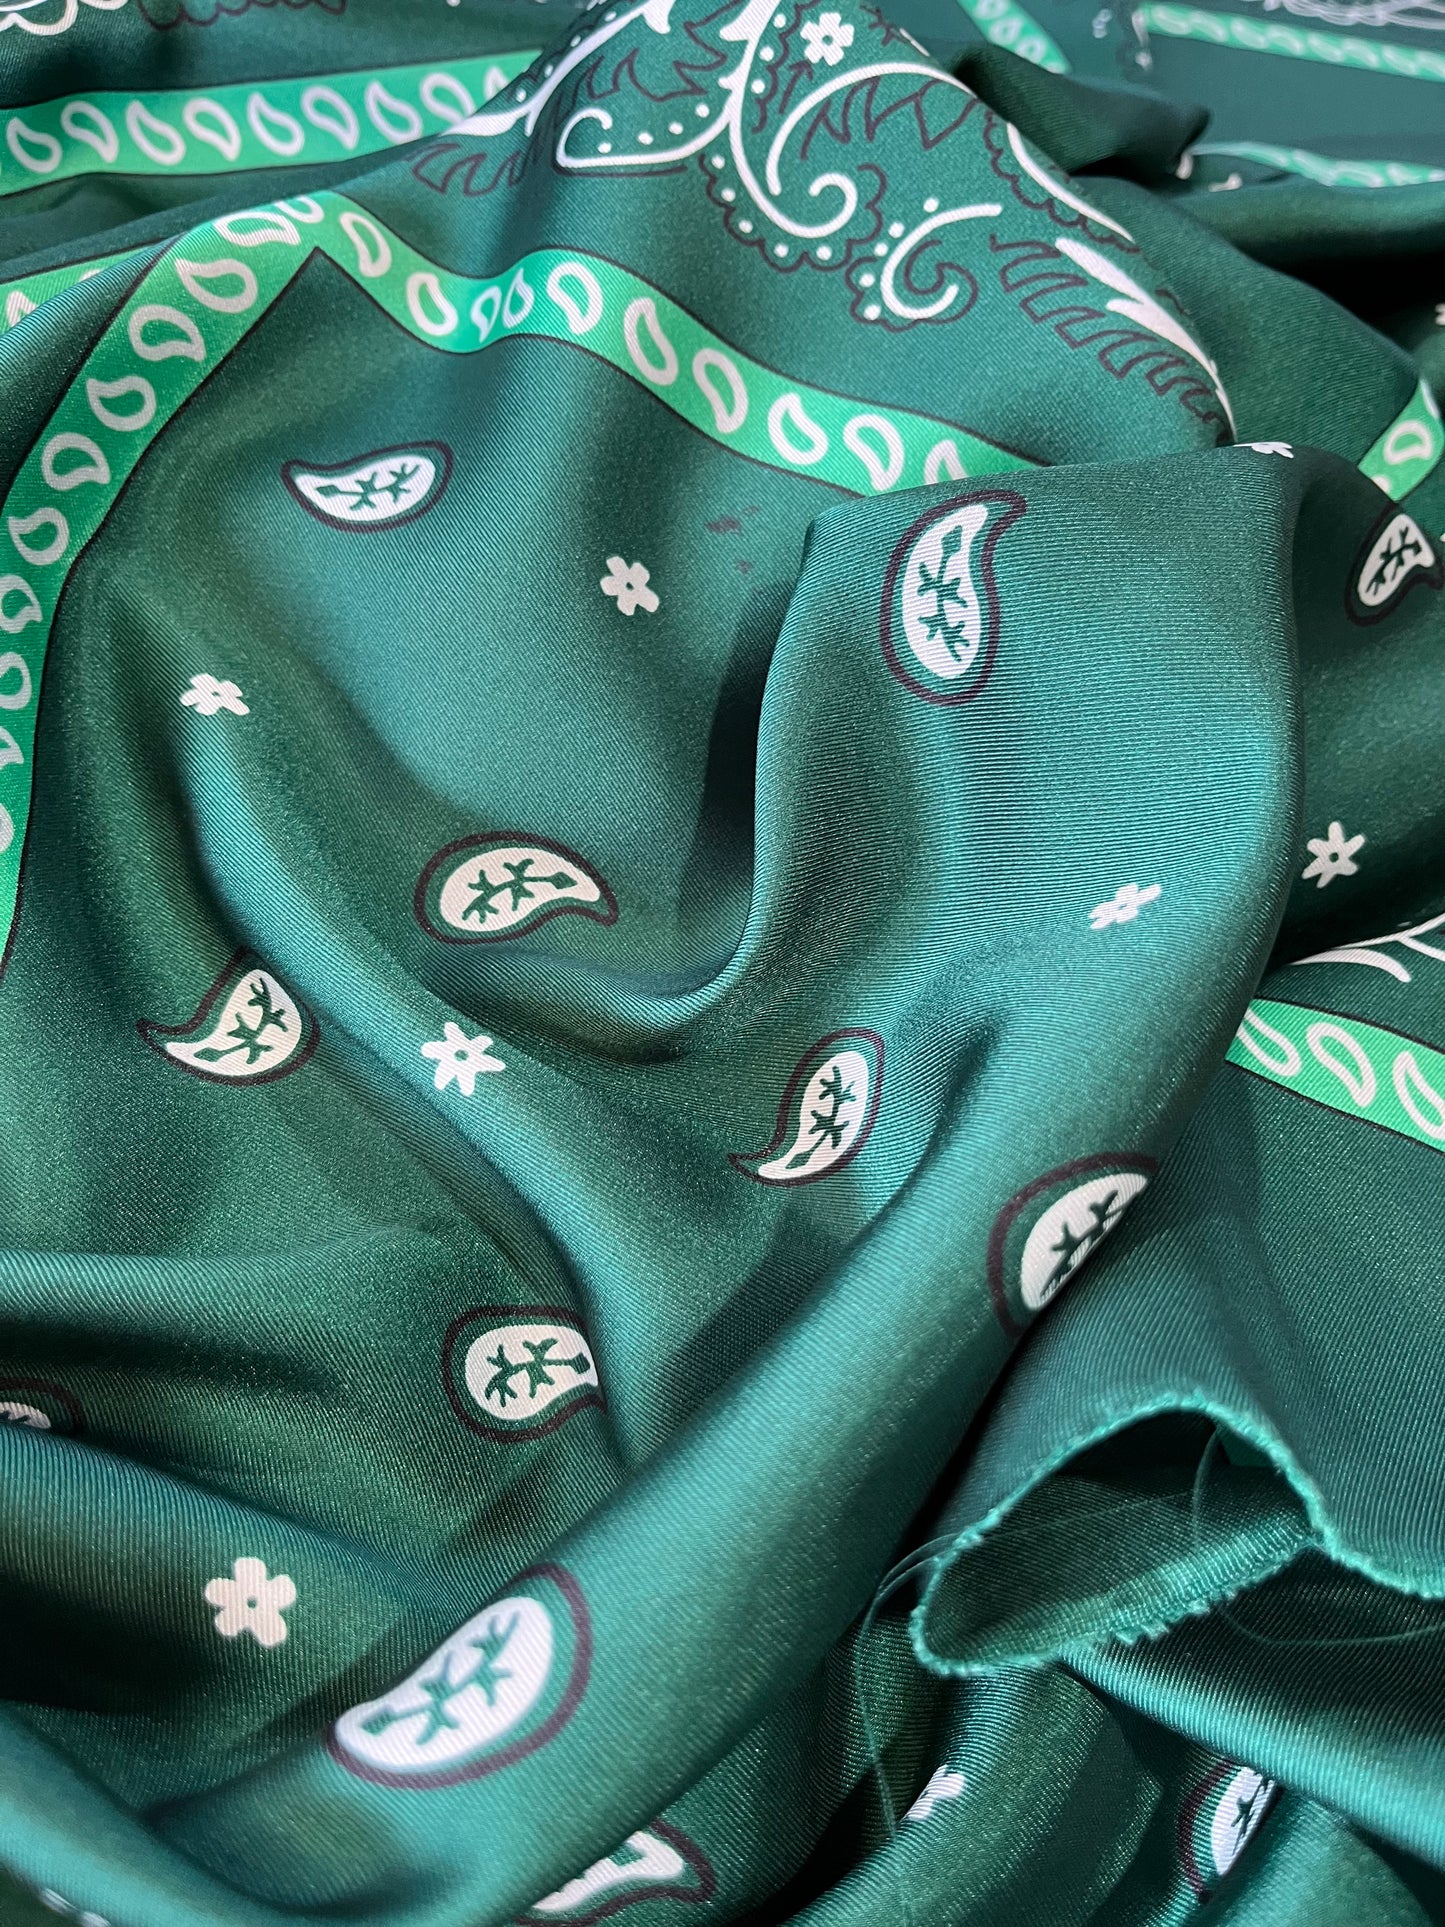 A01 ND 016 twill with green foulard